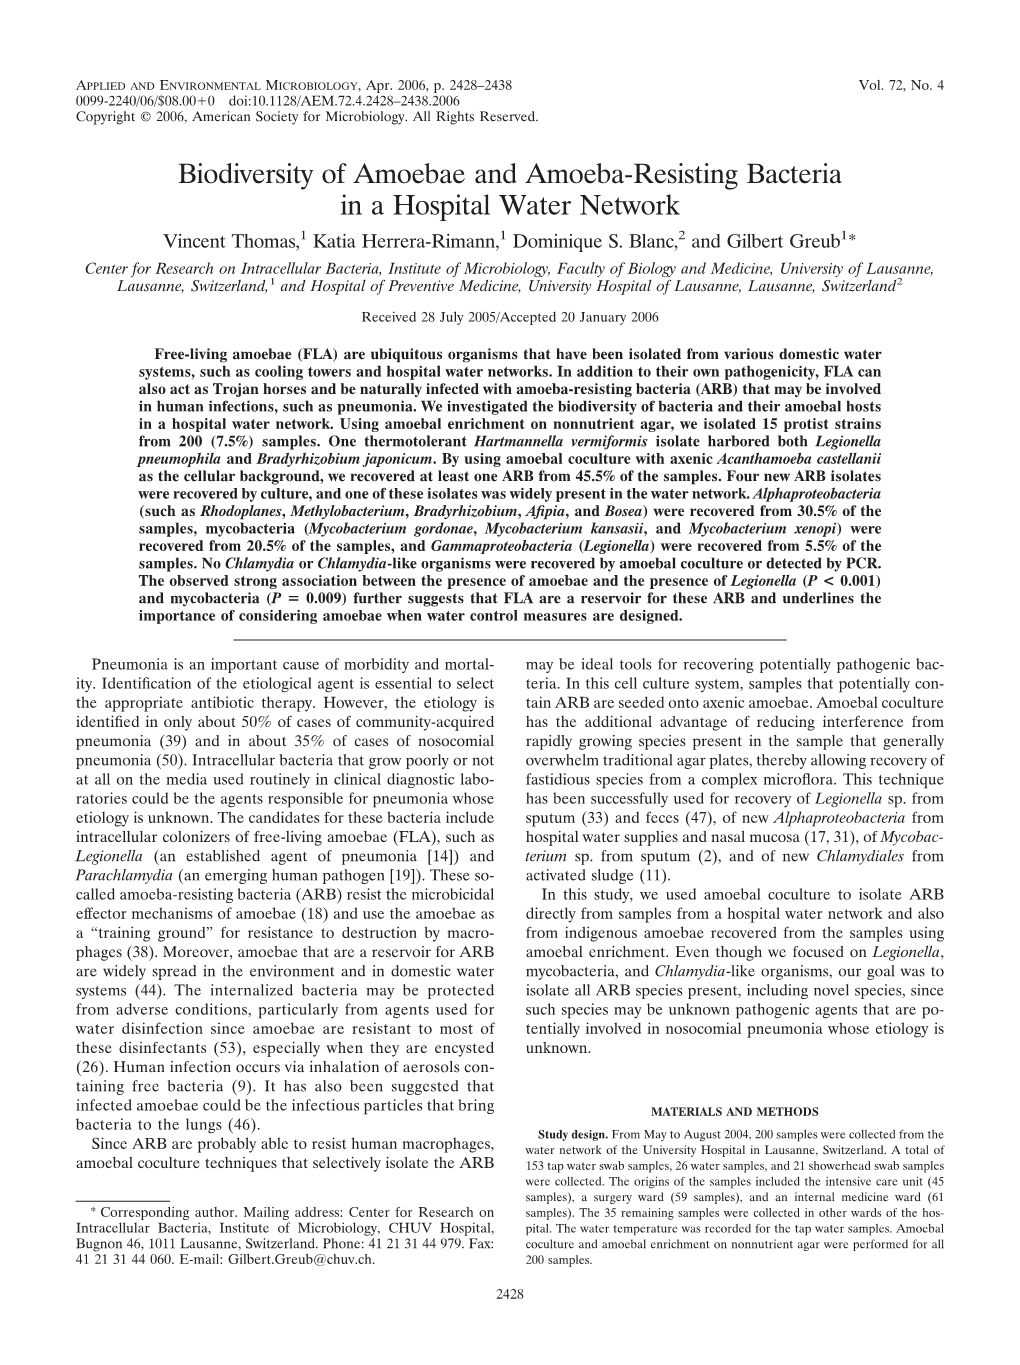 Biodiversity of Amoebae and Amoeba-Resisting Bacteria in a Hospital Water Network Vincent Thomas,1 Katia Herrera-Rimann,1 Dominique S